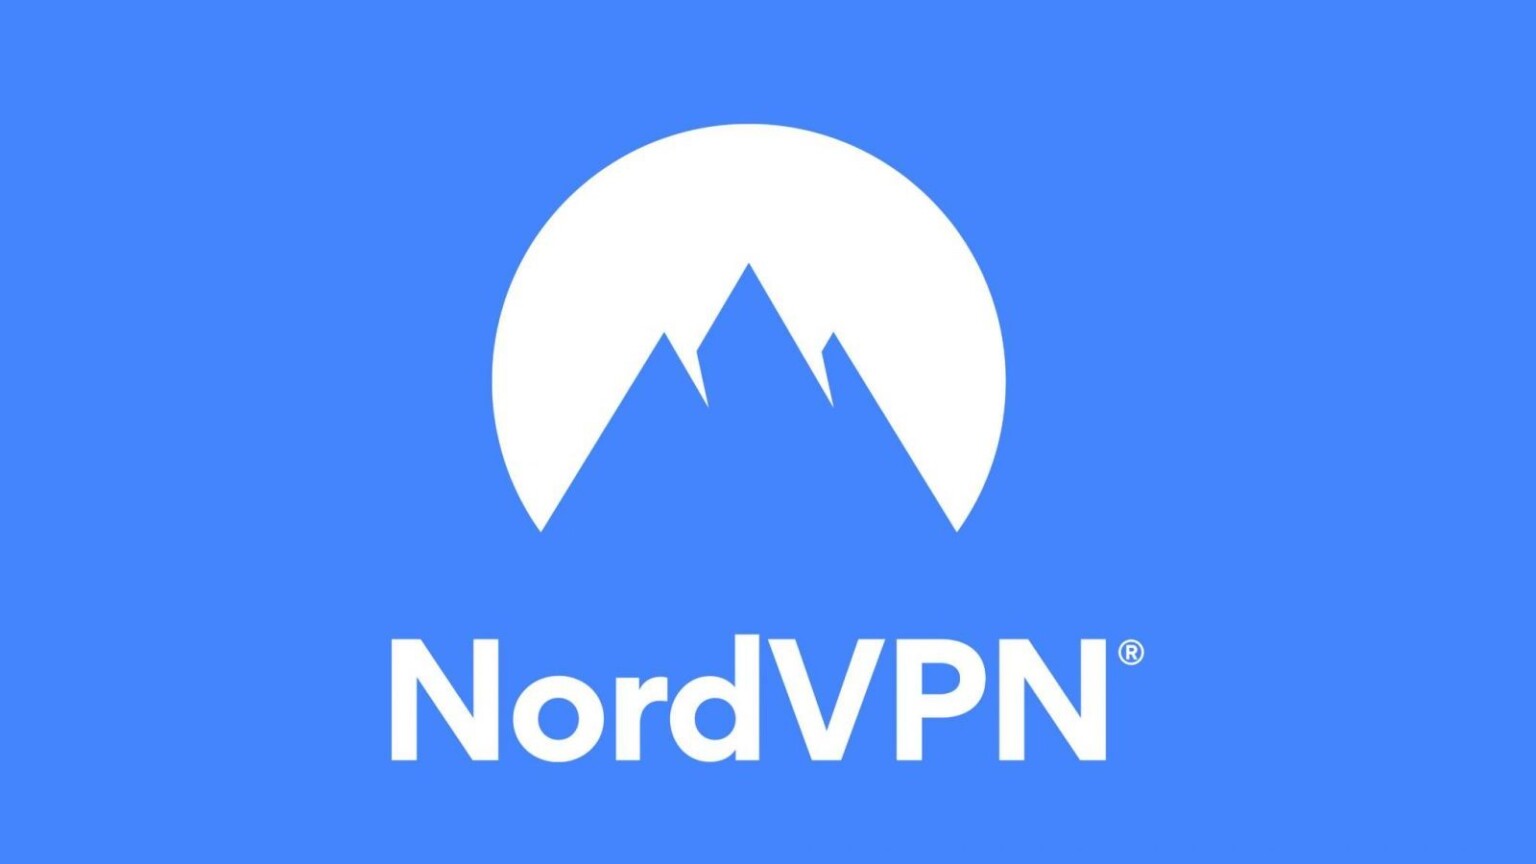 nordvpn for mac 10.9